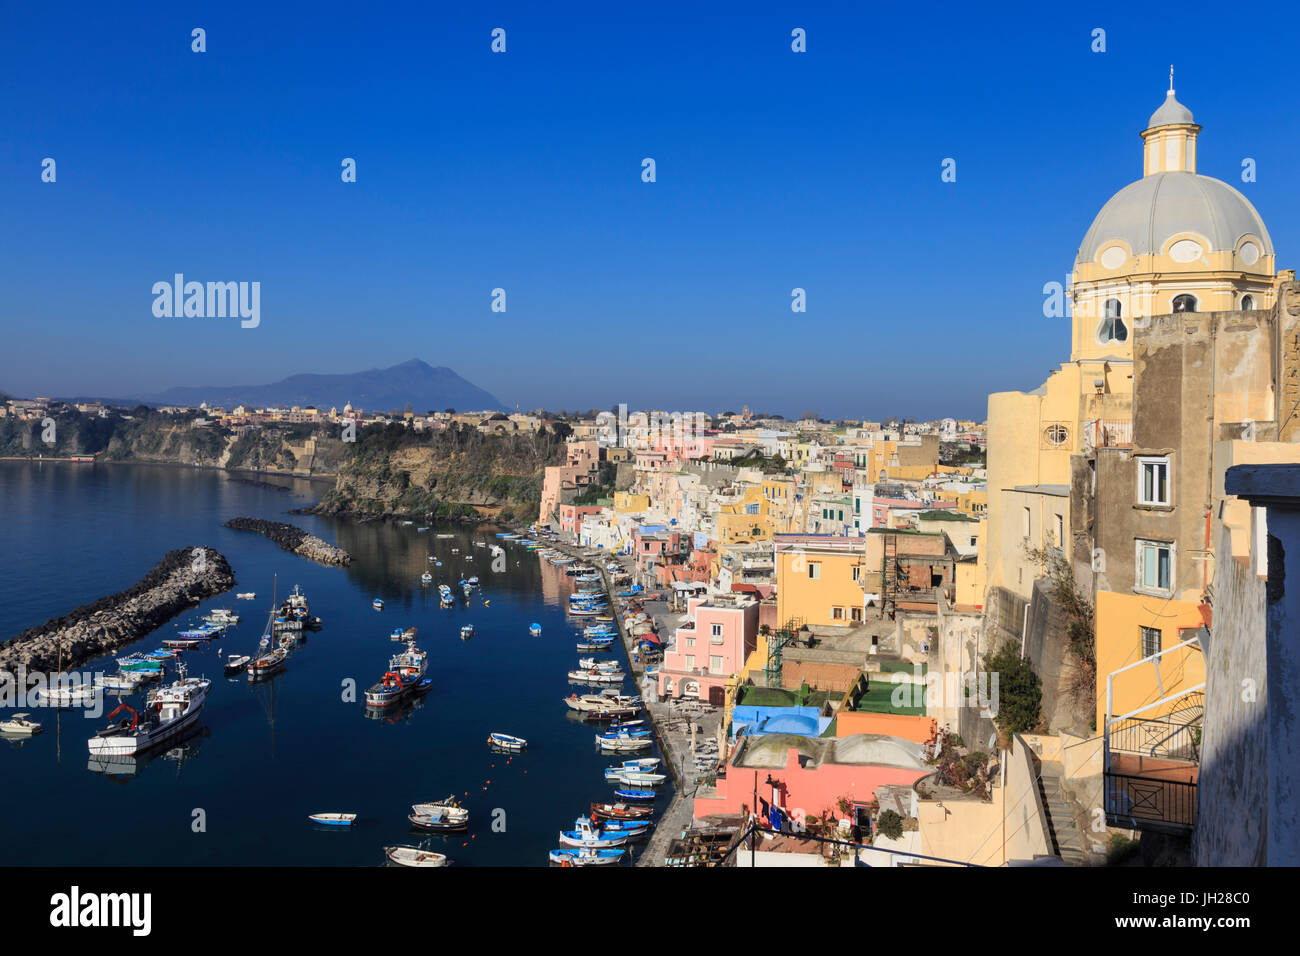 Marina Corricella, pretty fishing village, colourful fishermen's houses, boats and church, Procida Island, Bay of Naples, Italy Stock Photo